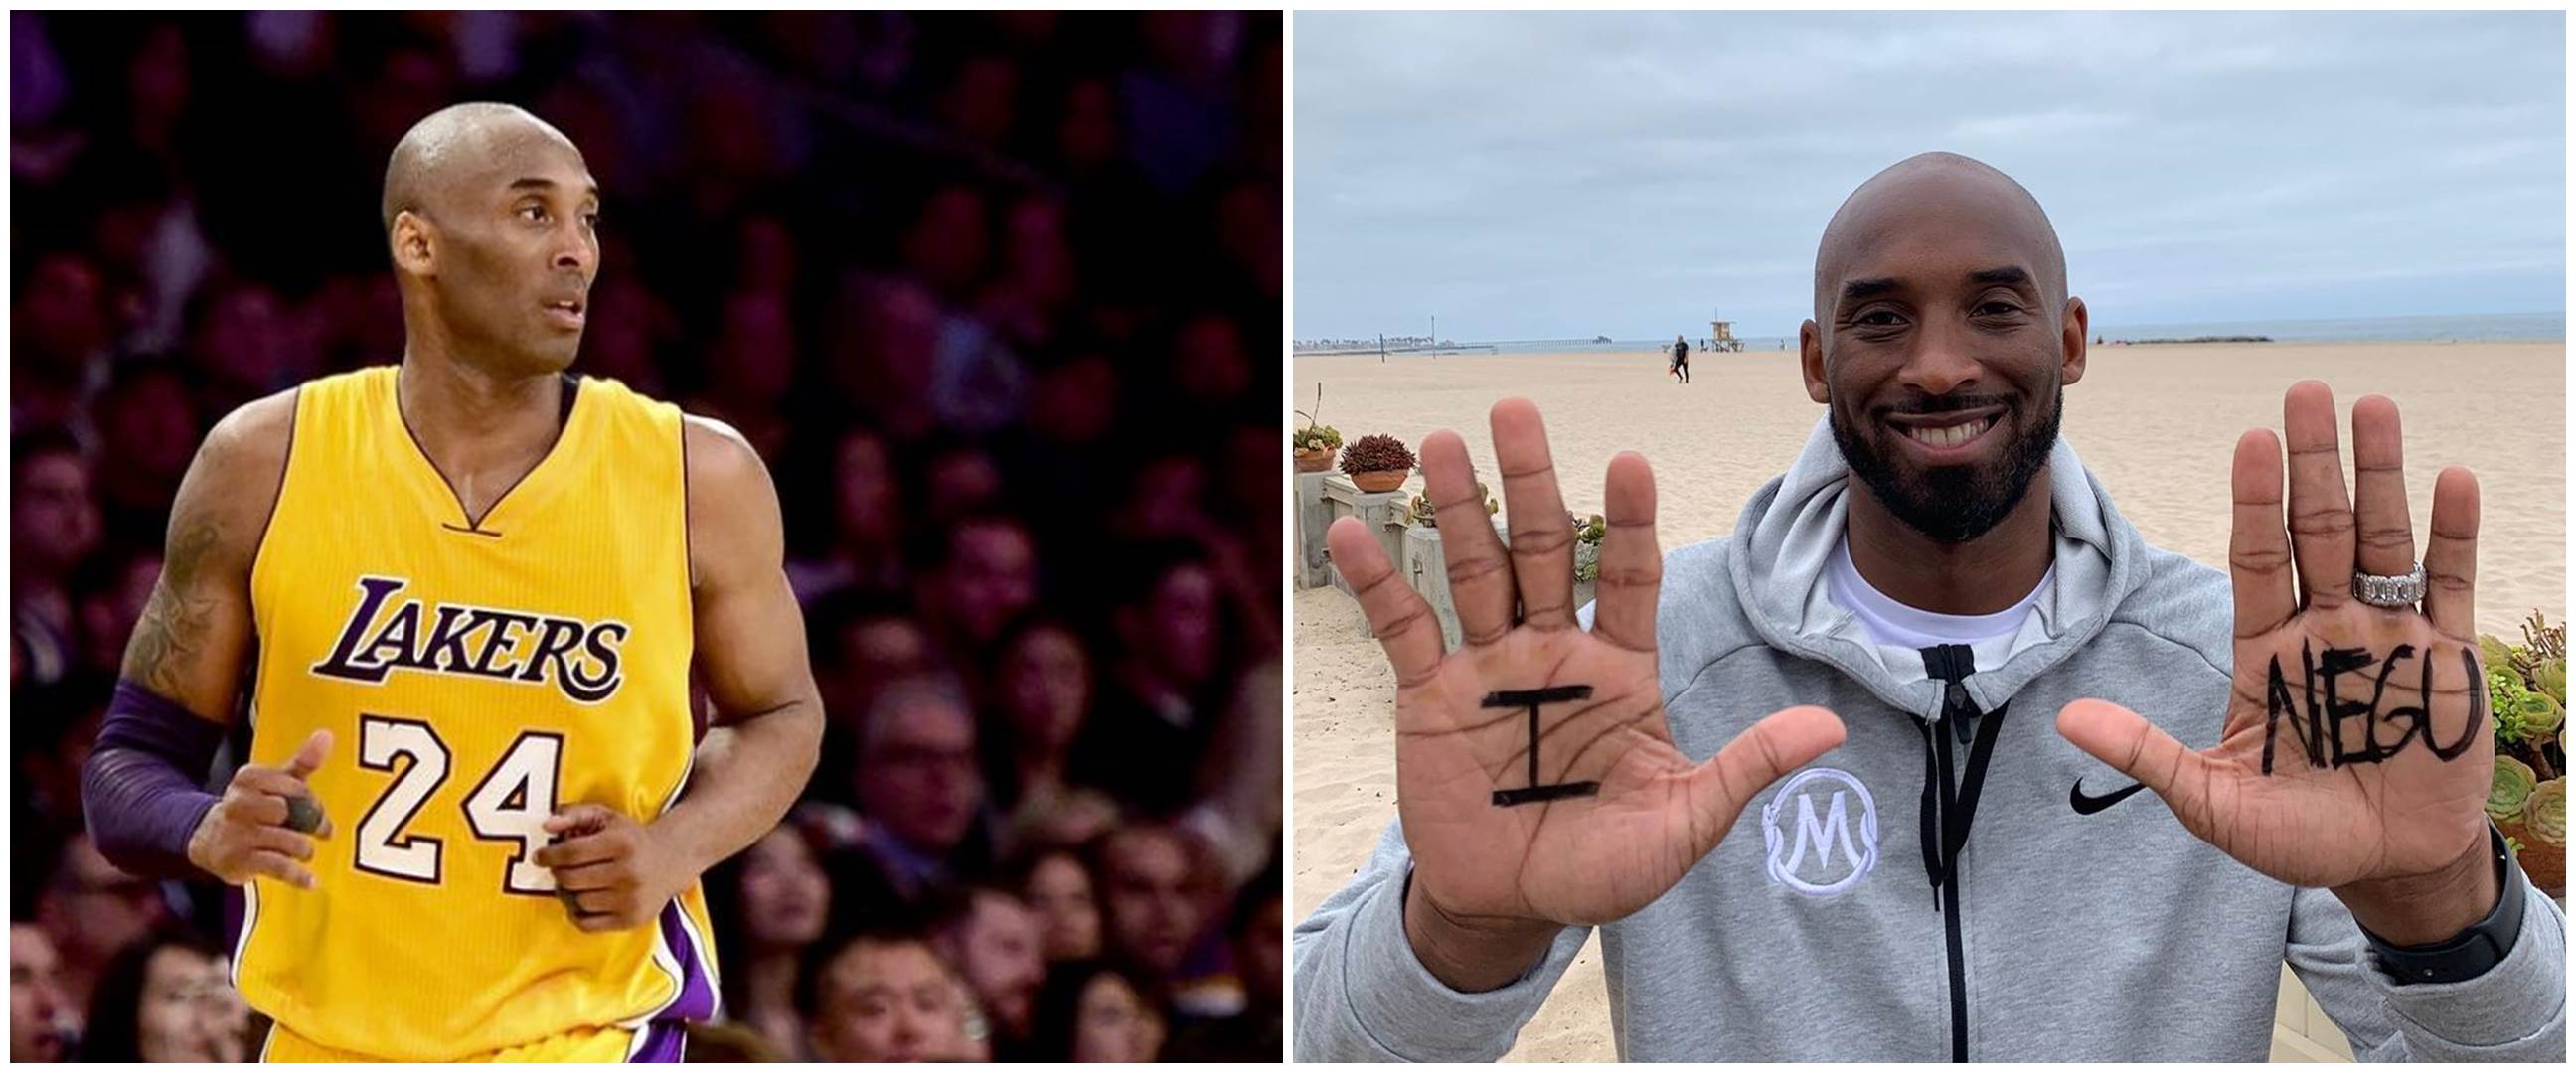 6 Kematian atlet paling tragis 3 tahun terakhir, ada Kobe Bryant